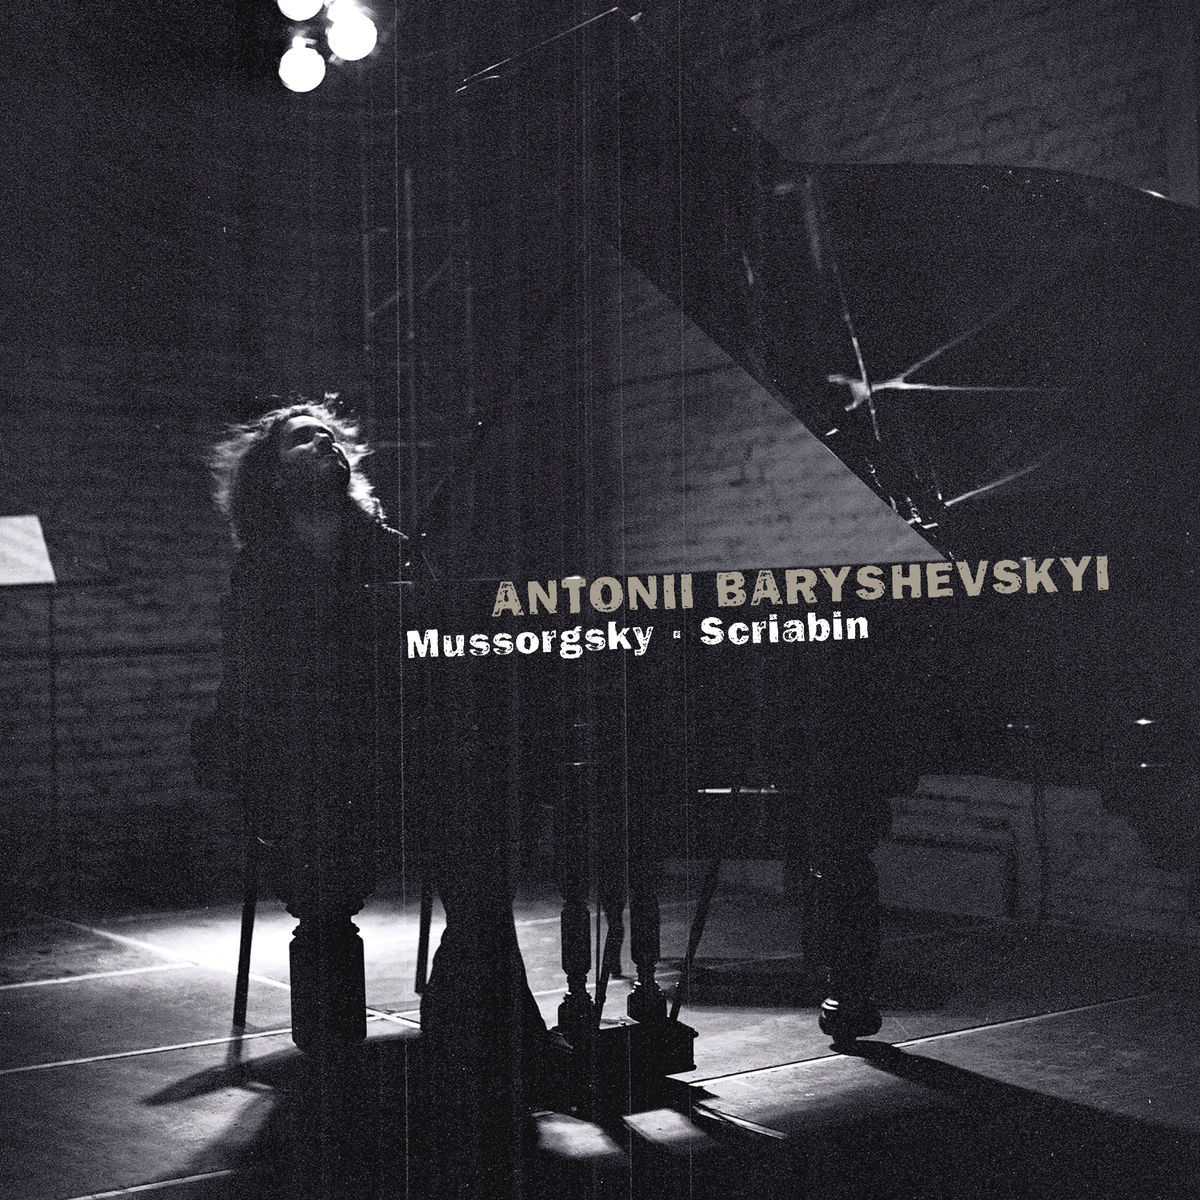 Antonii Baryshevskyi - Antonii Baryshevskyi: Mussorgsky & Scriabin (2015) [FLAC 24bit/96kHz]